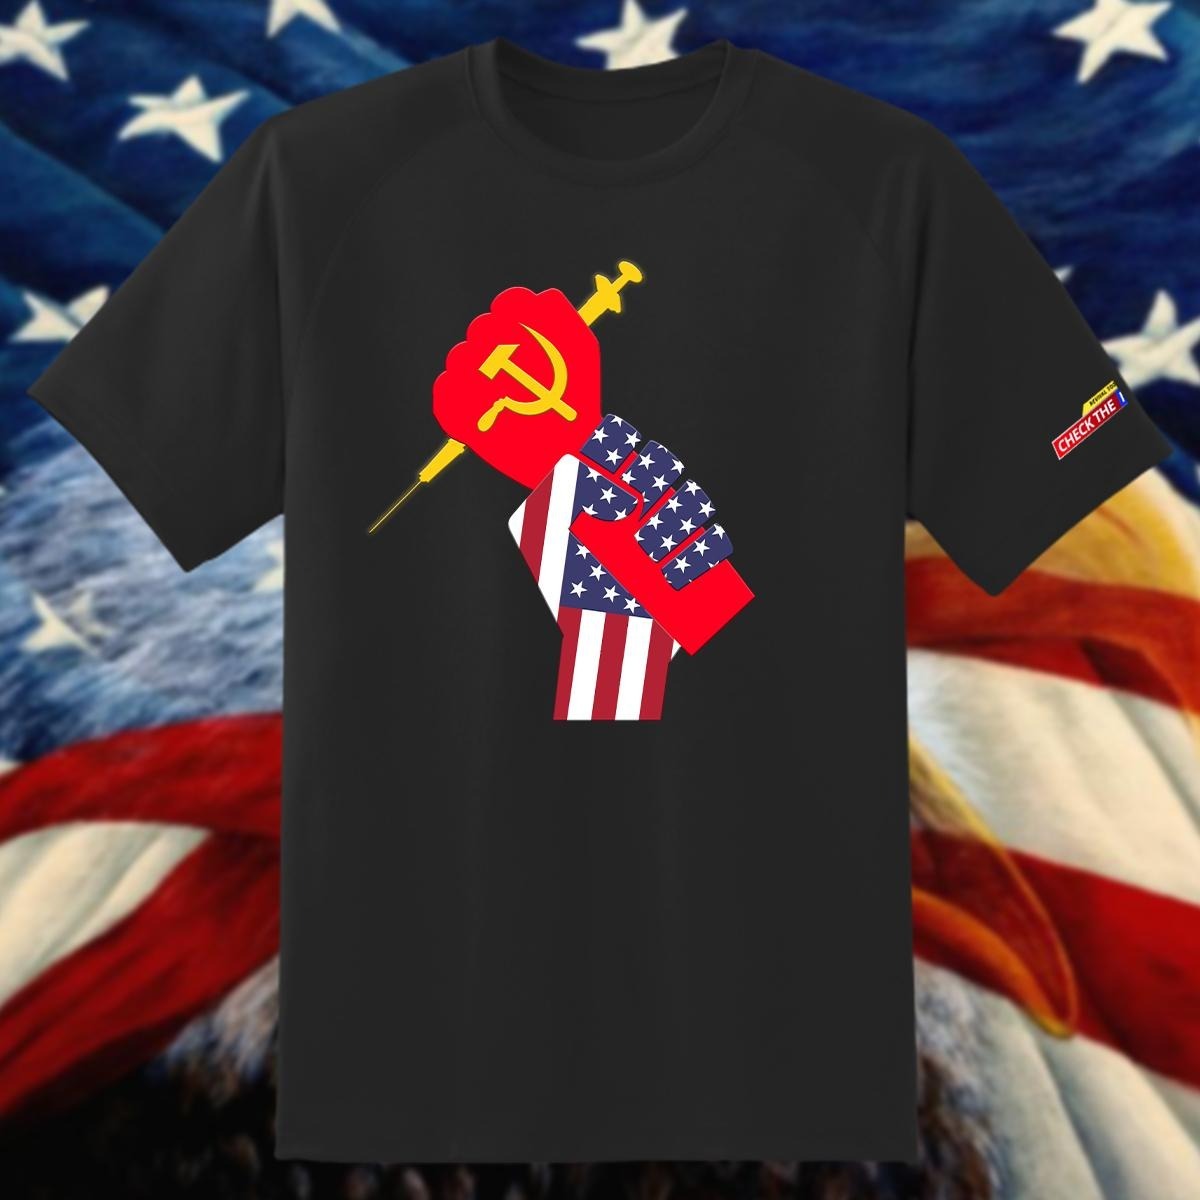 Resist Communism" T-Shirt –